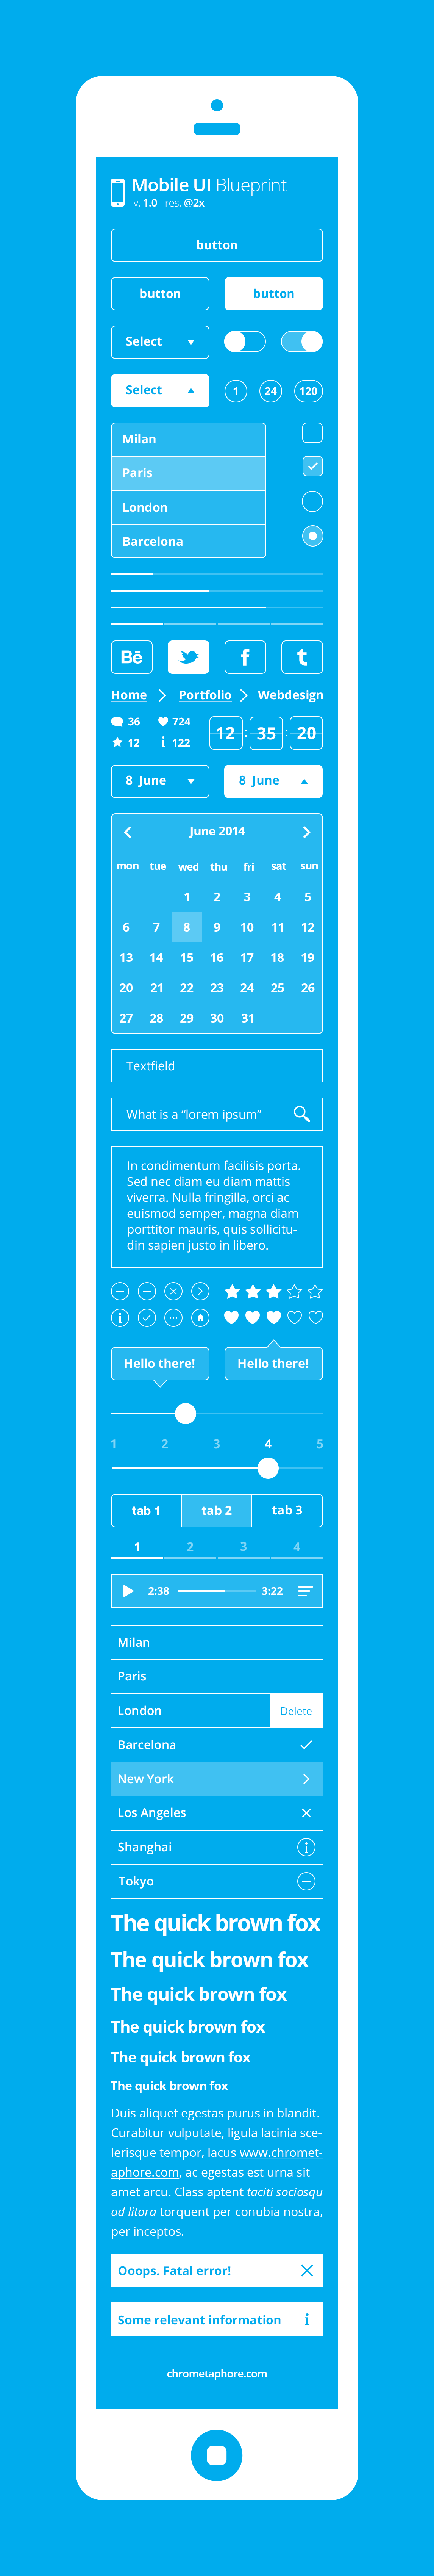 Mobile-UI-blueprint-1.0